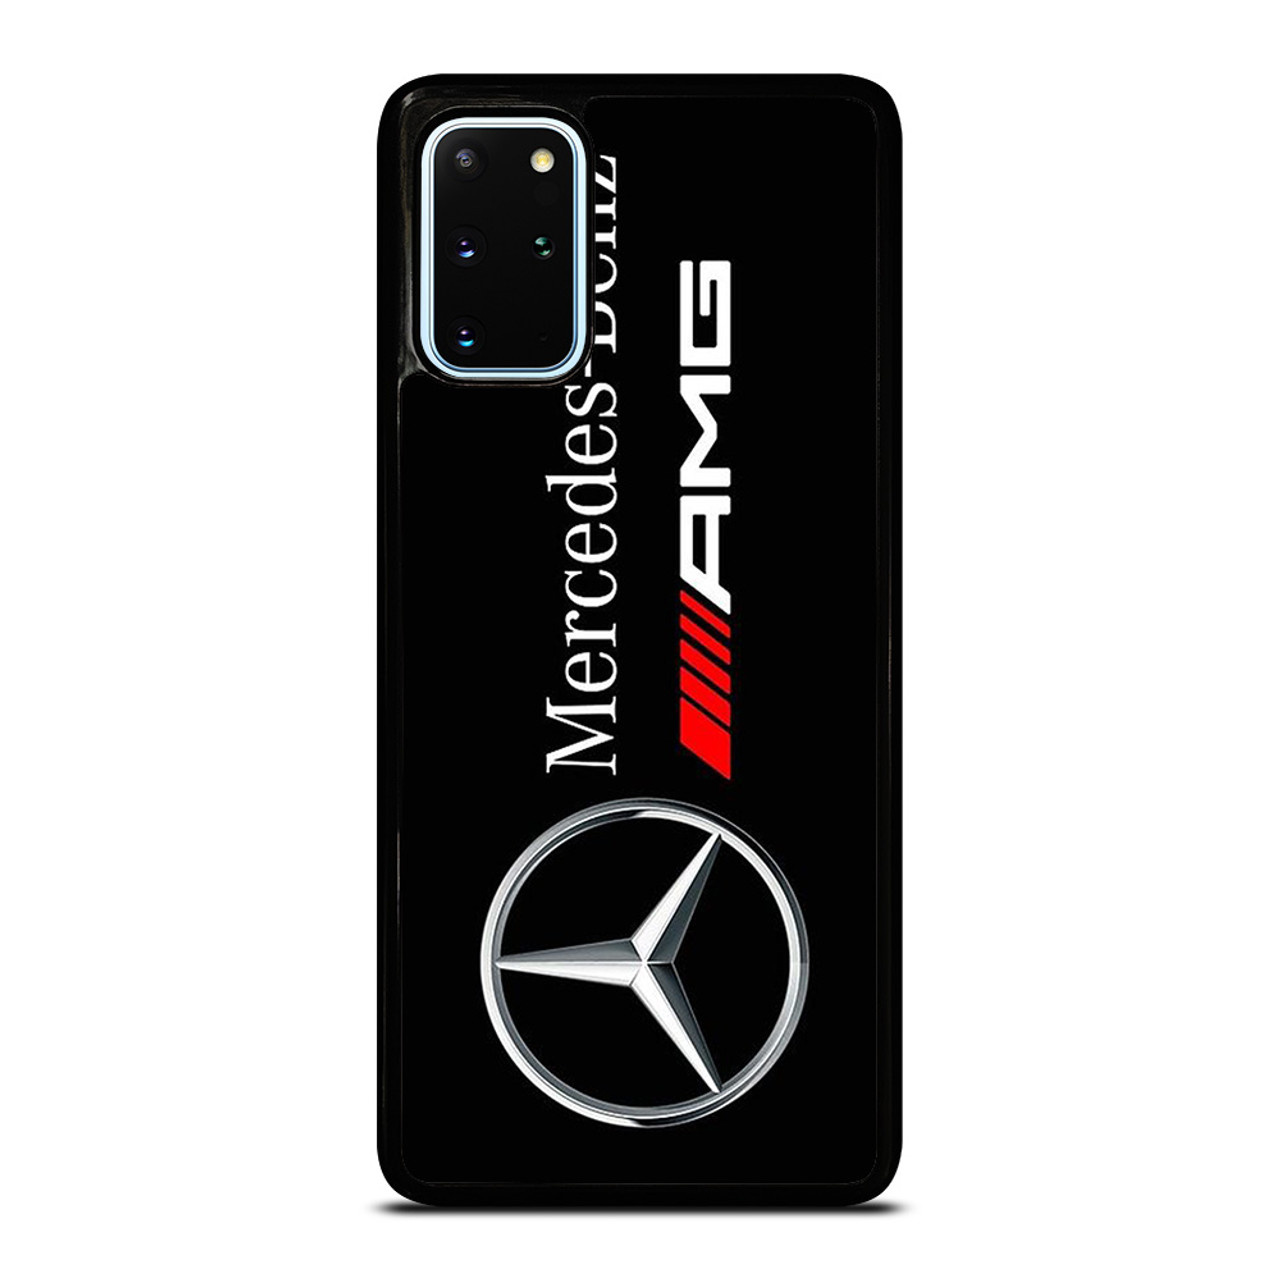 MERCEDES BENZ AMG LOGO Samsung Galaxy S20 Plus Case Cover